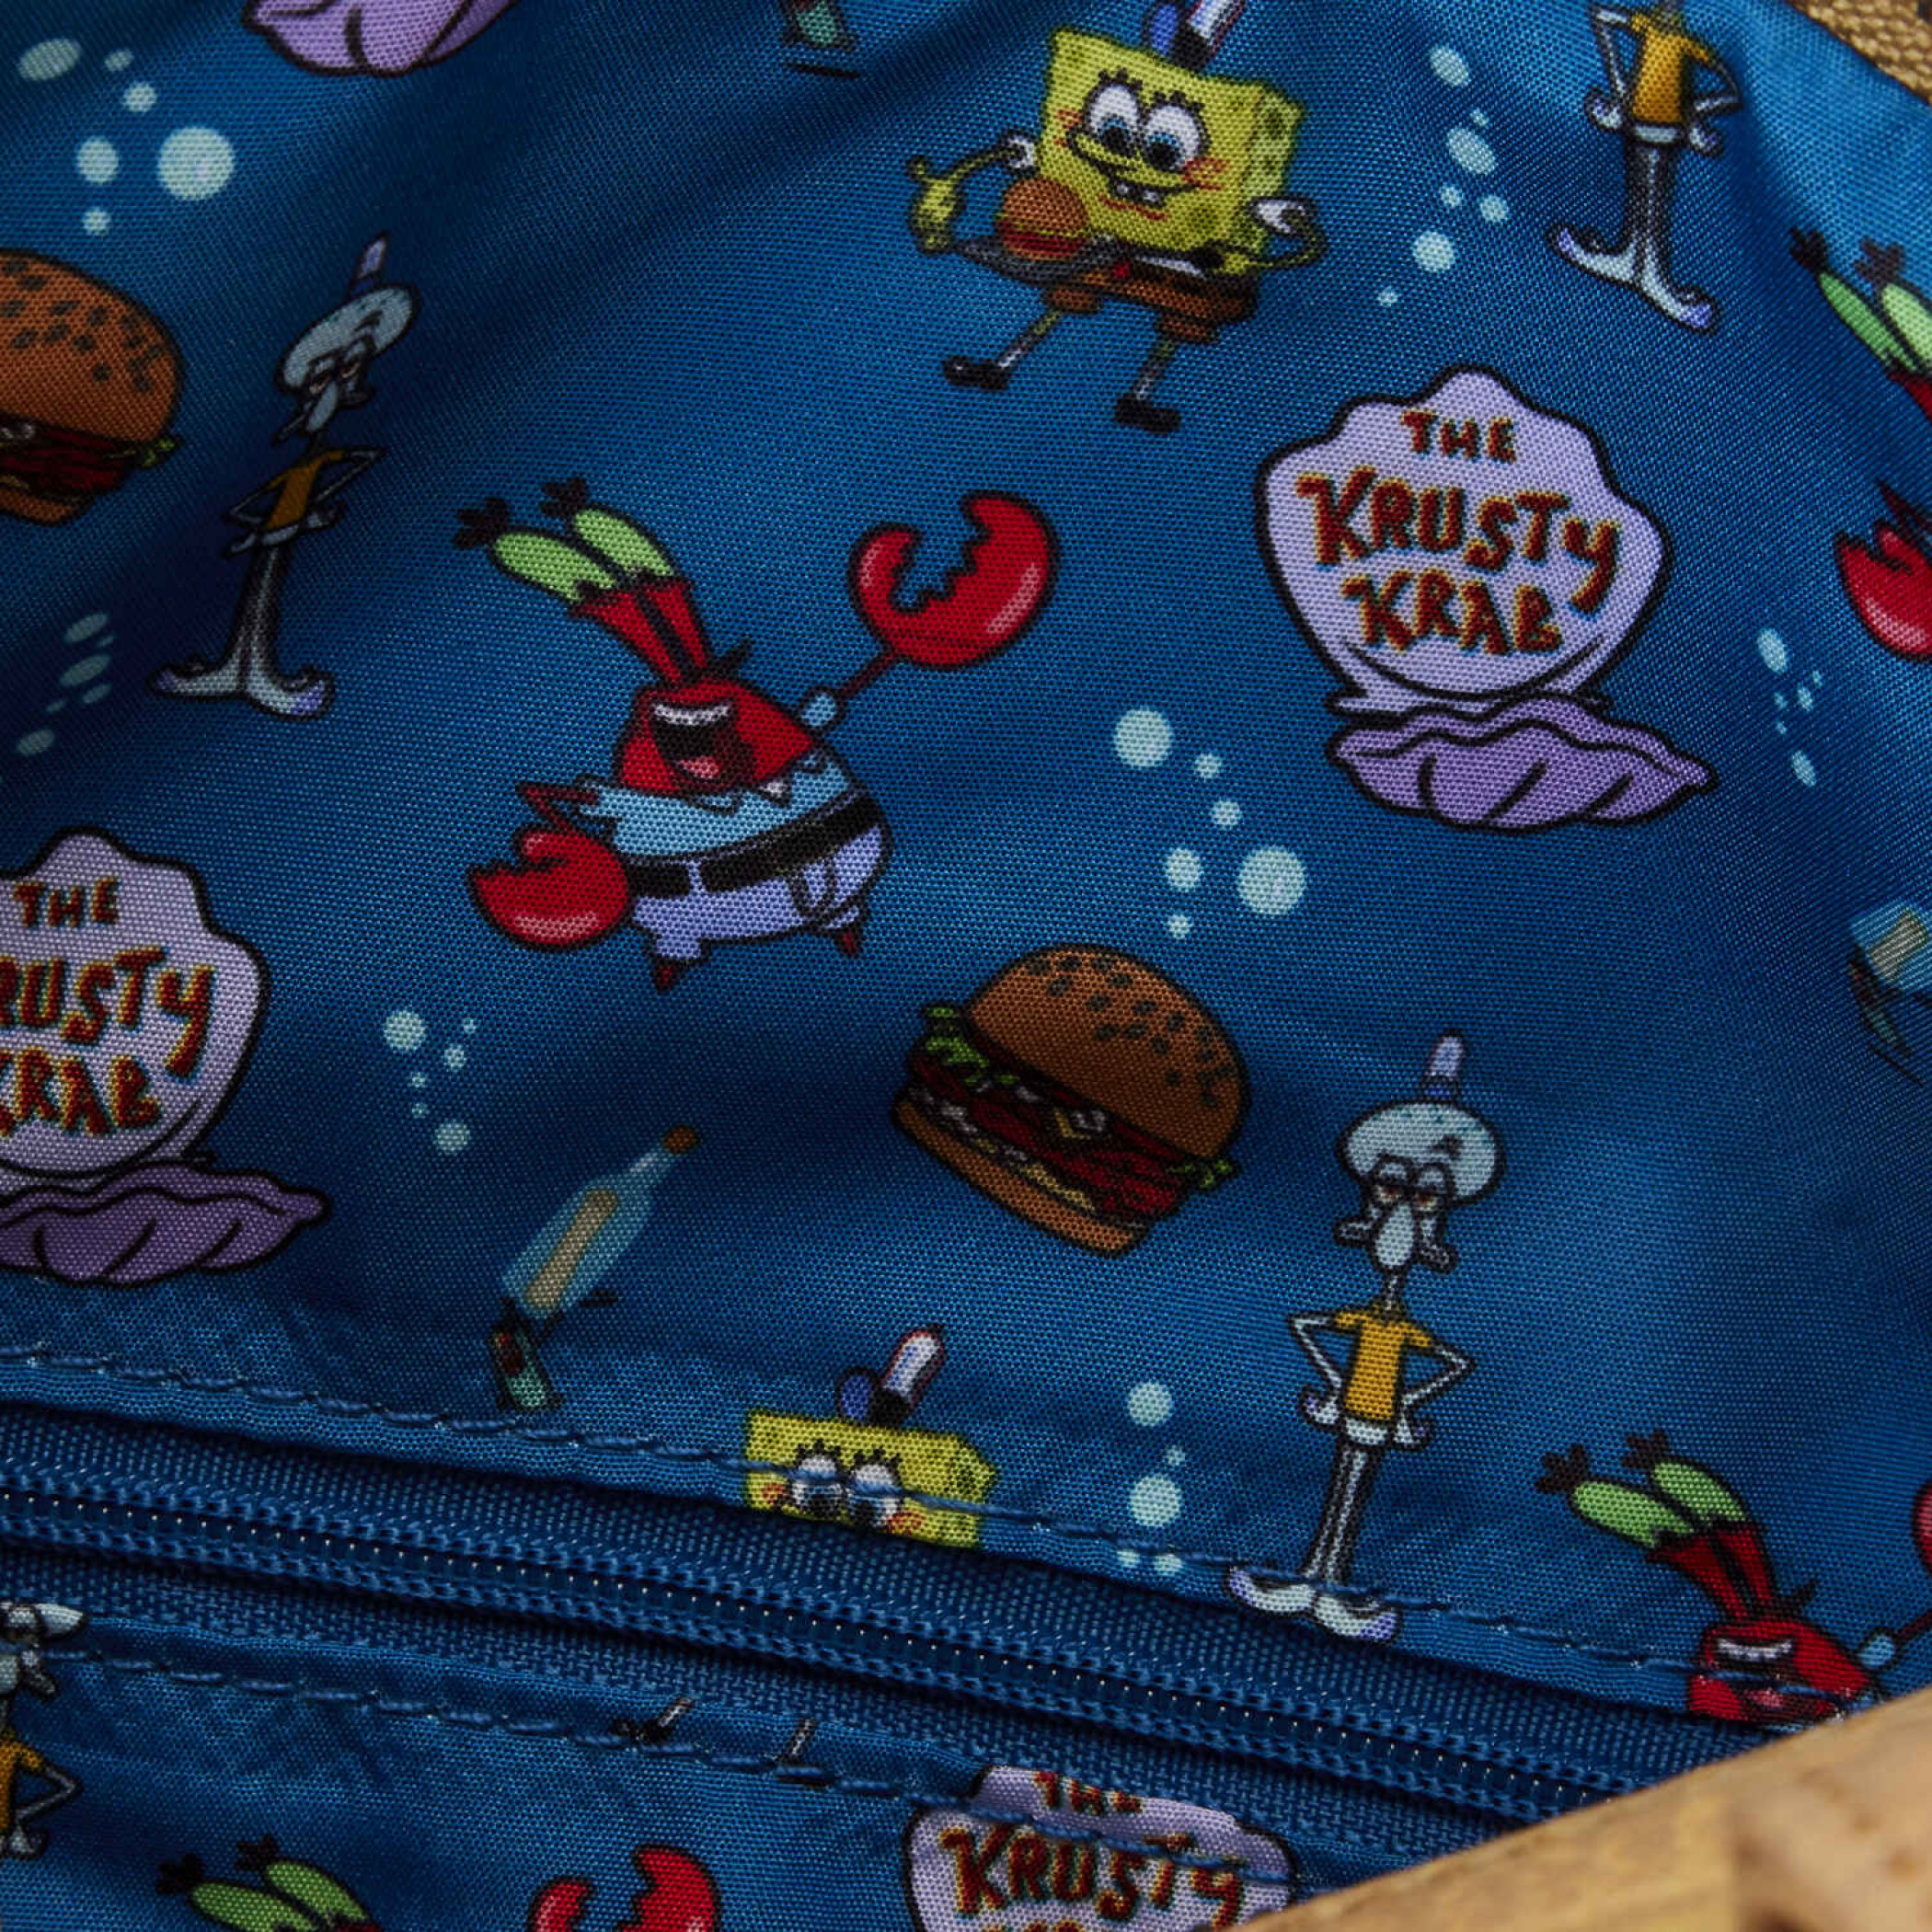 SpongeBob SquarePants Krusty Krab Crossbody Bag by Loungefly